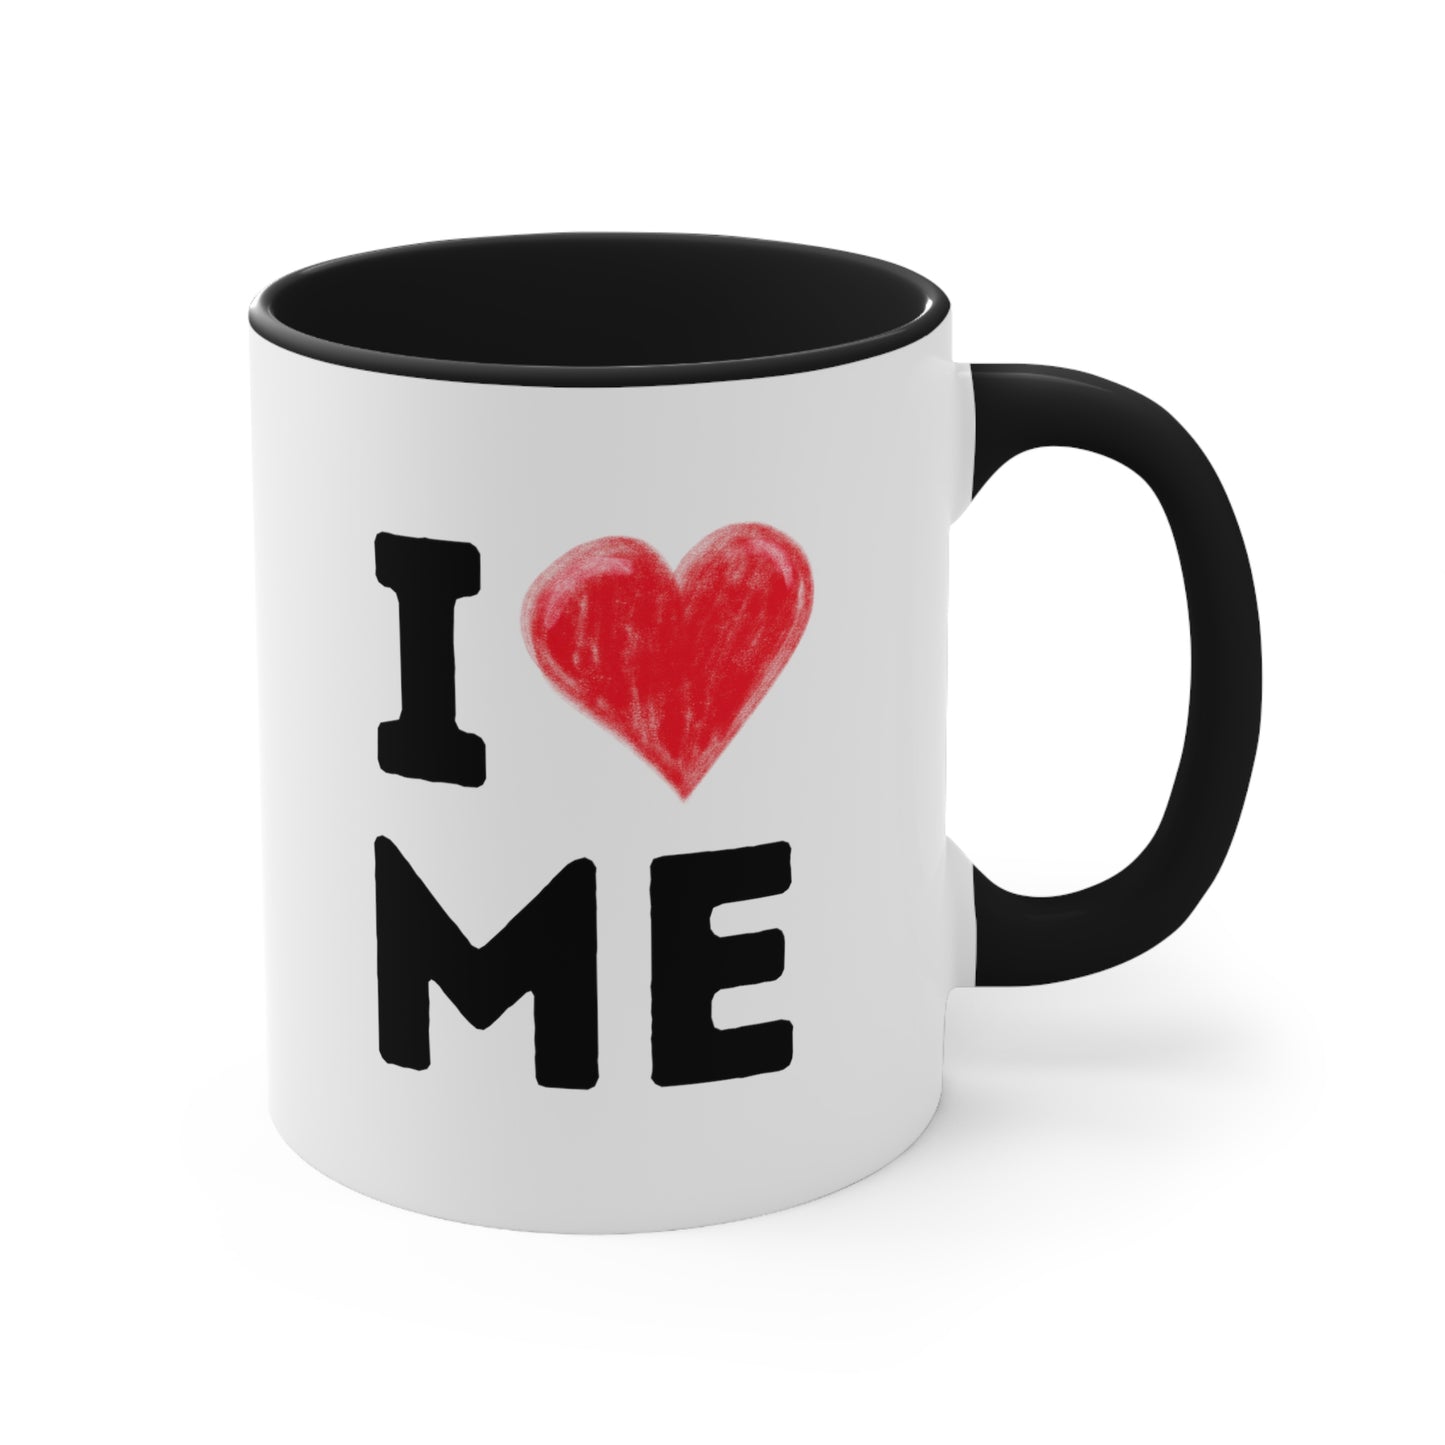 I Love Me Coffee Mug